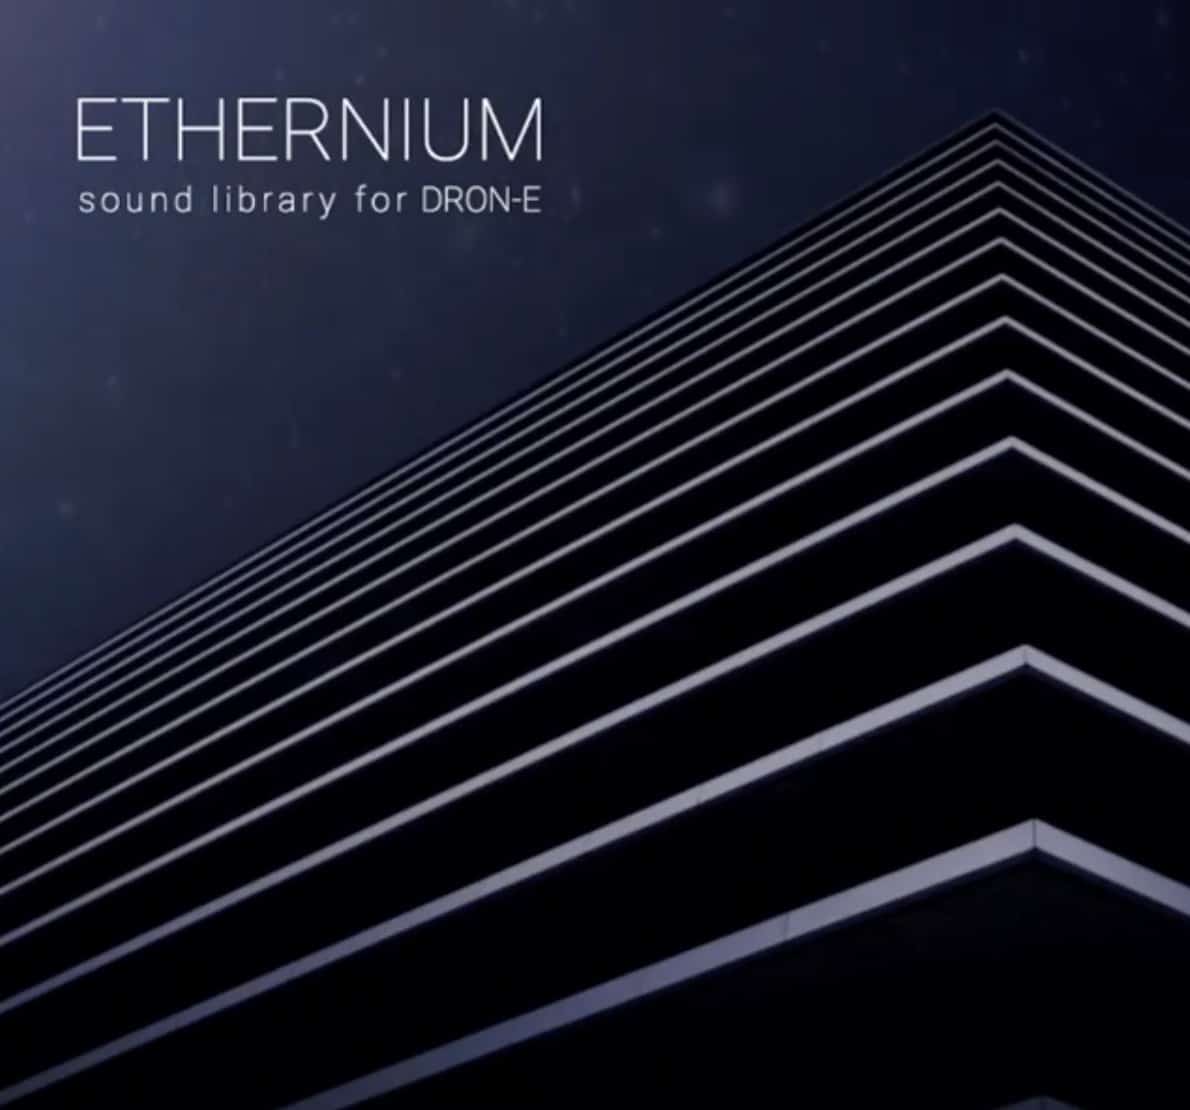 Ethernium – sound library for DRON-E